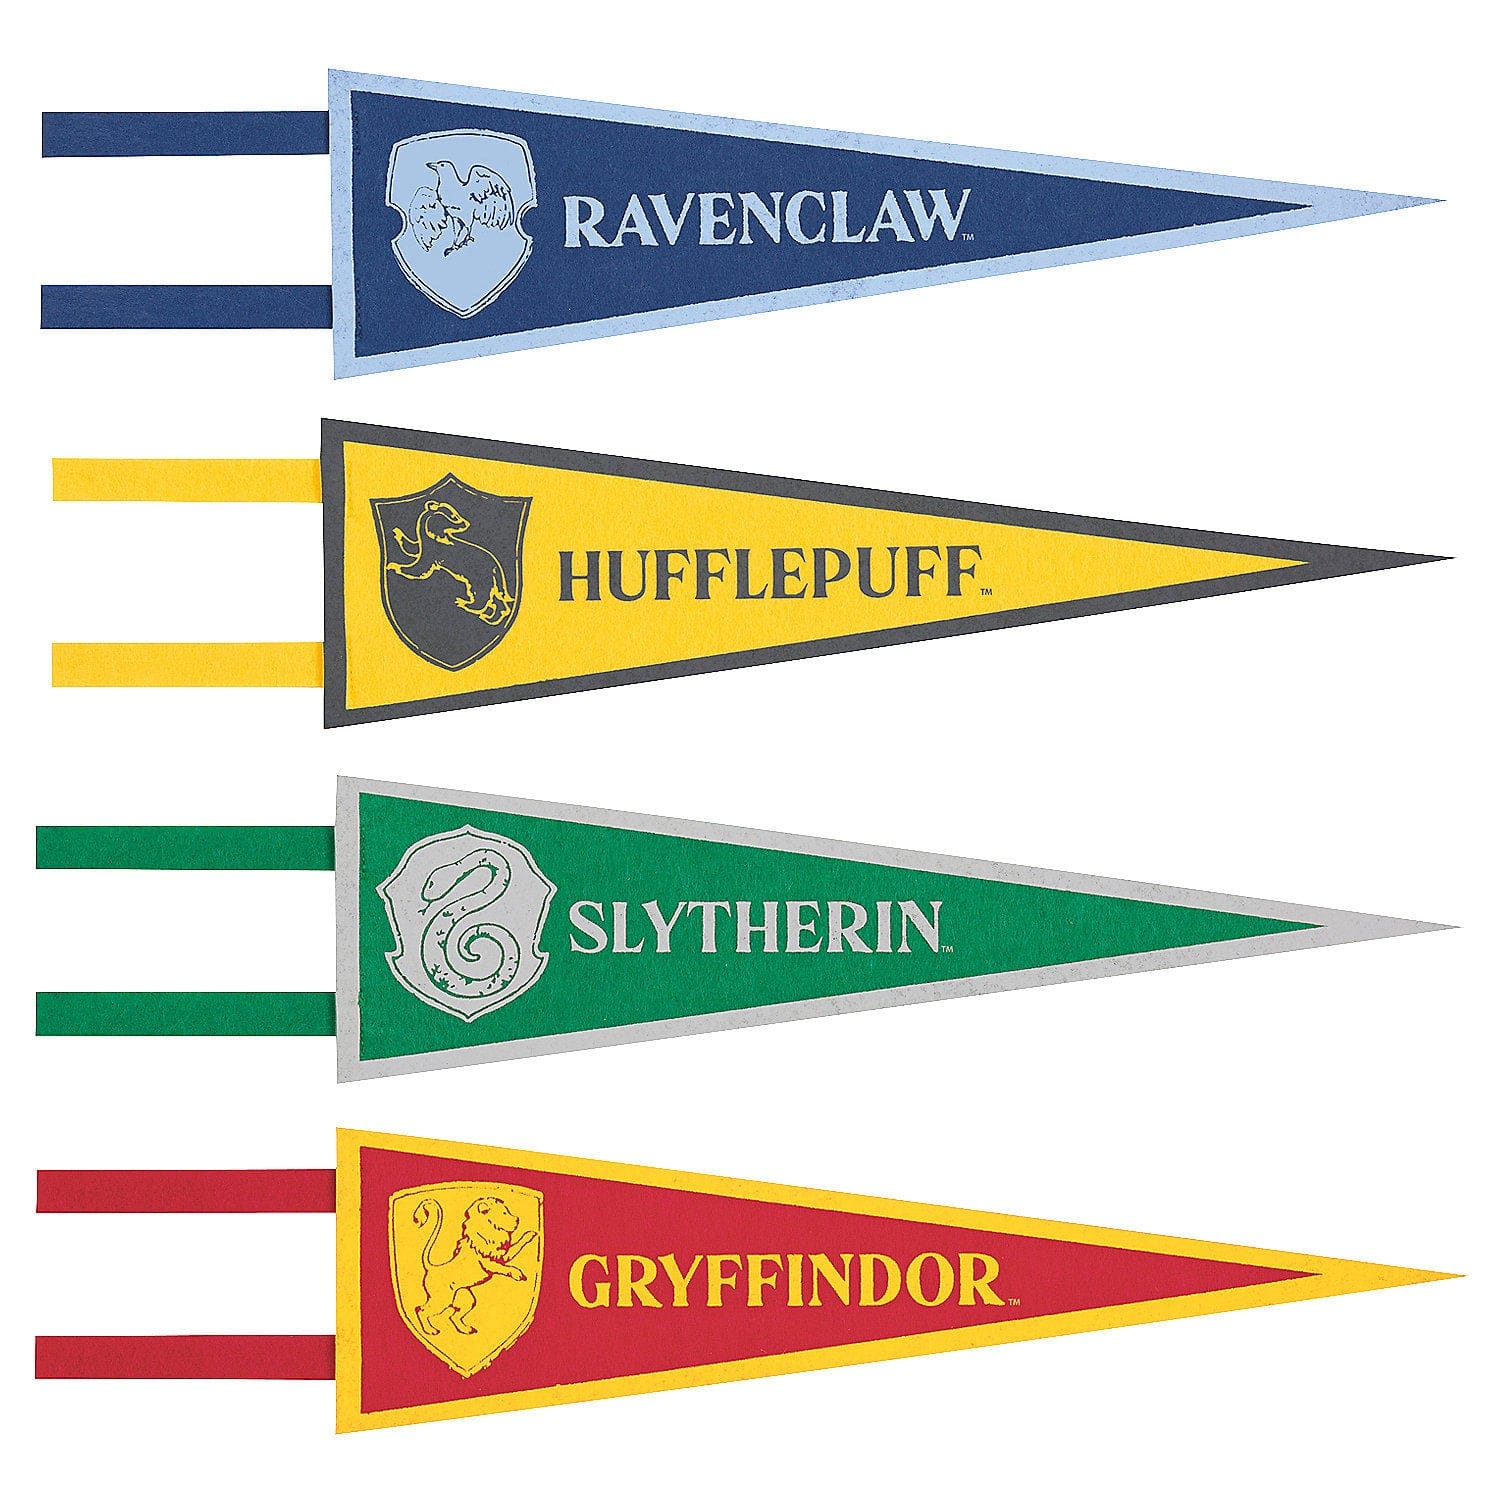 Harry Potter Hogwarts Crest Balloons – Chroma Celebrations